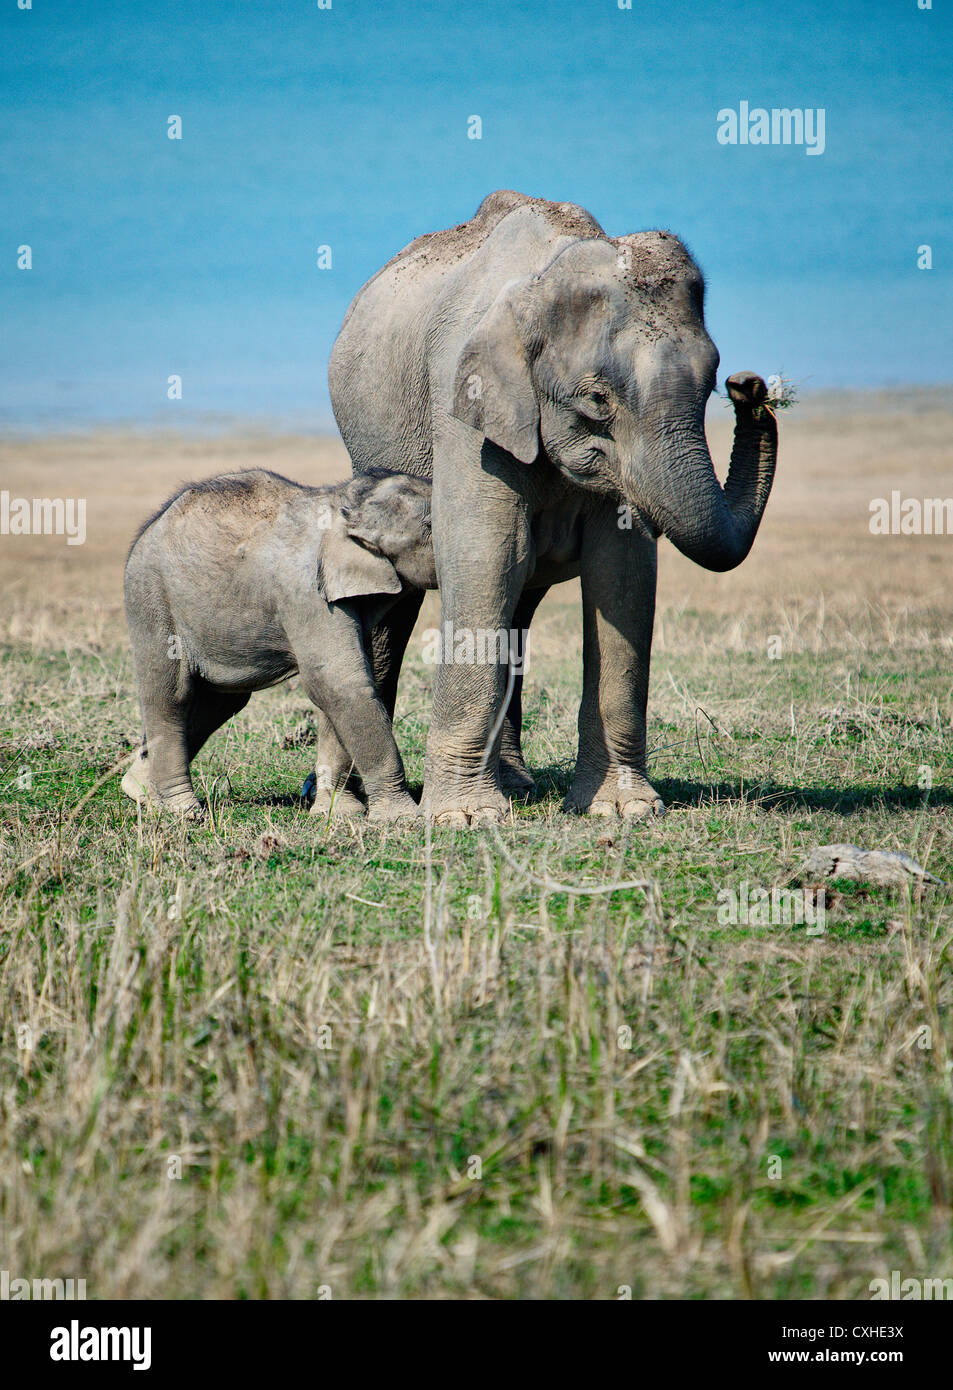 Wild elephants in Dhikala area in Jim Corbett Tiger Reserve, India. Stock Photo